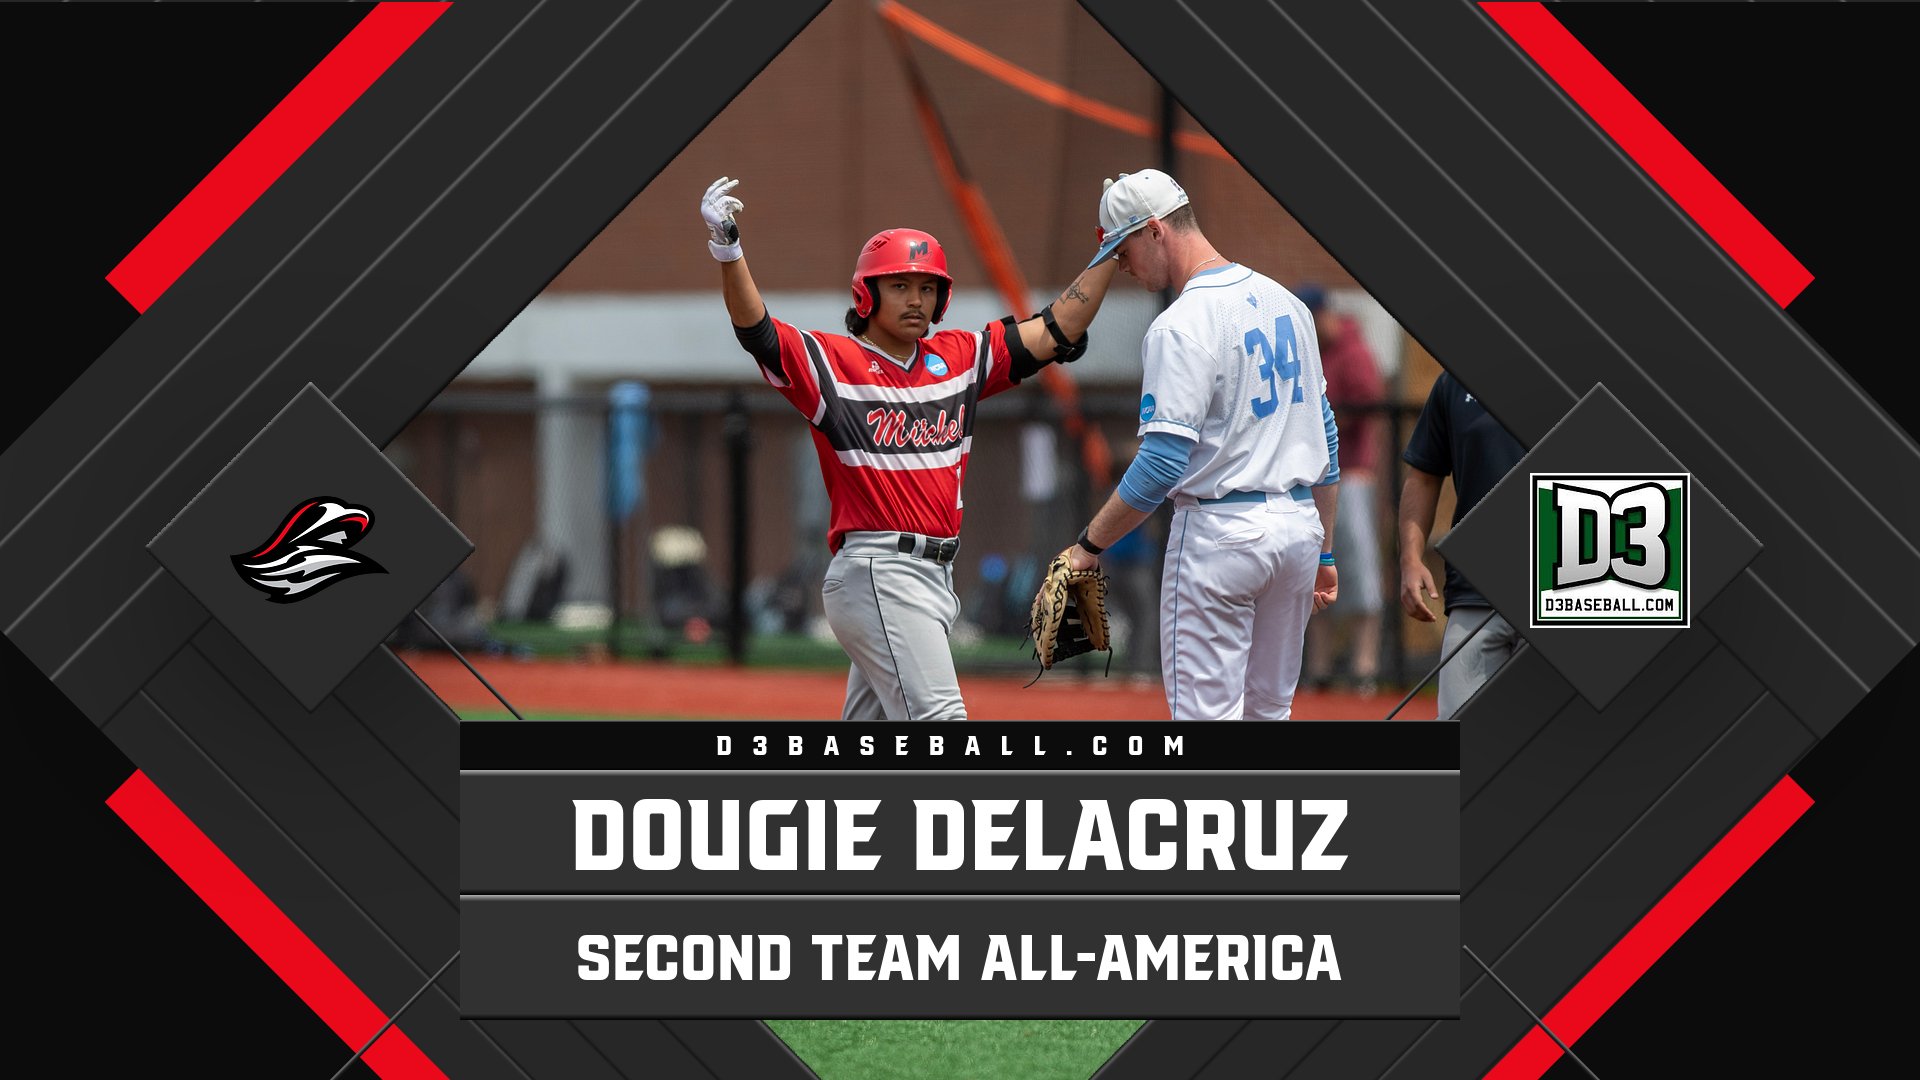 DelaCruz Garners D3baseball.com All-America Honors